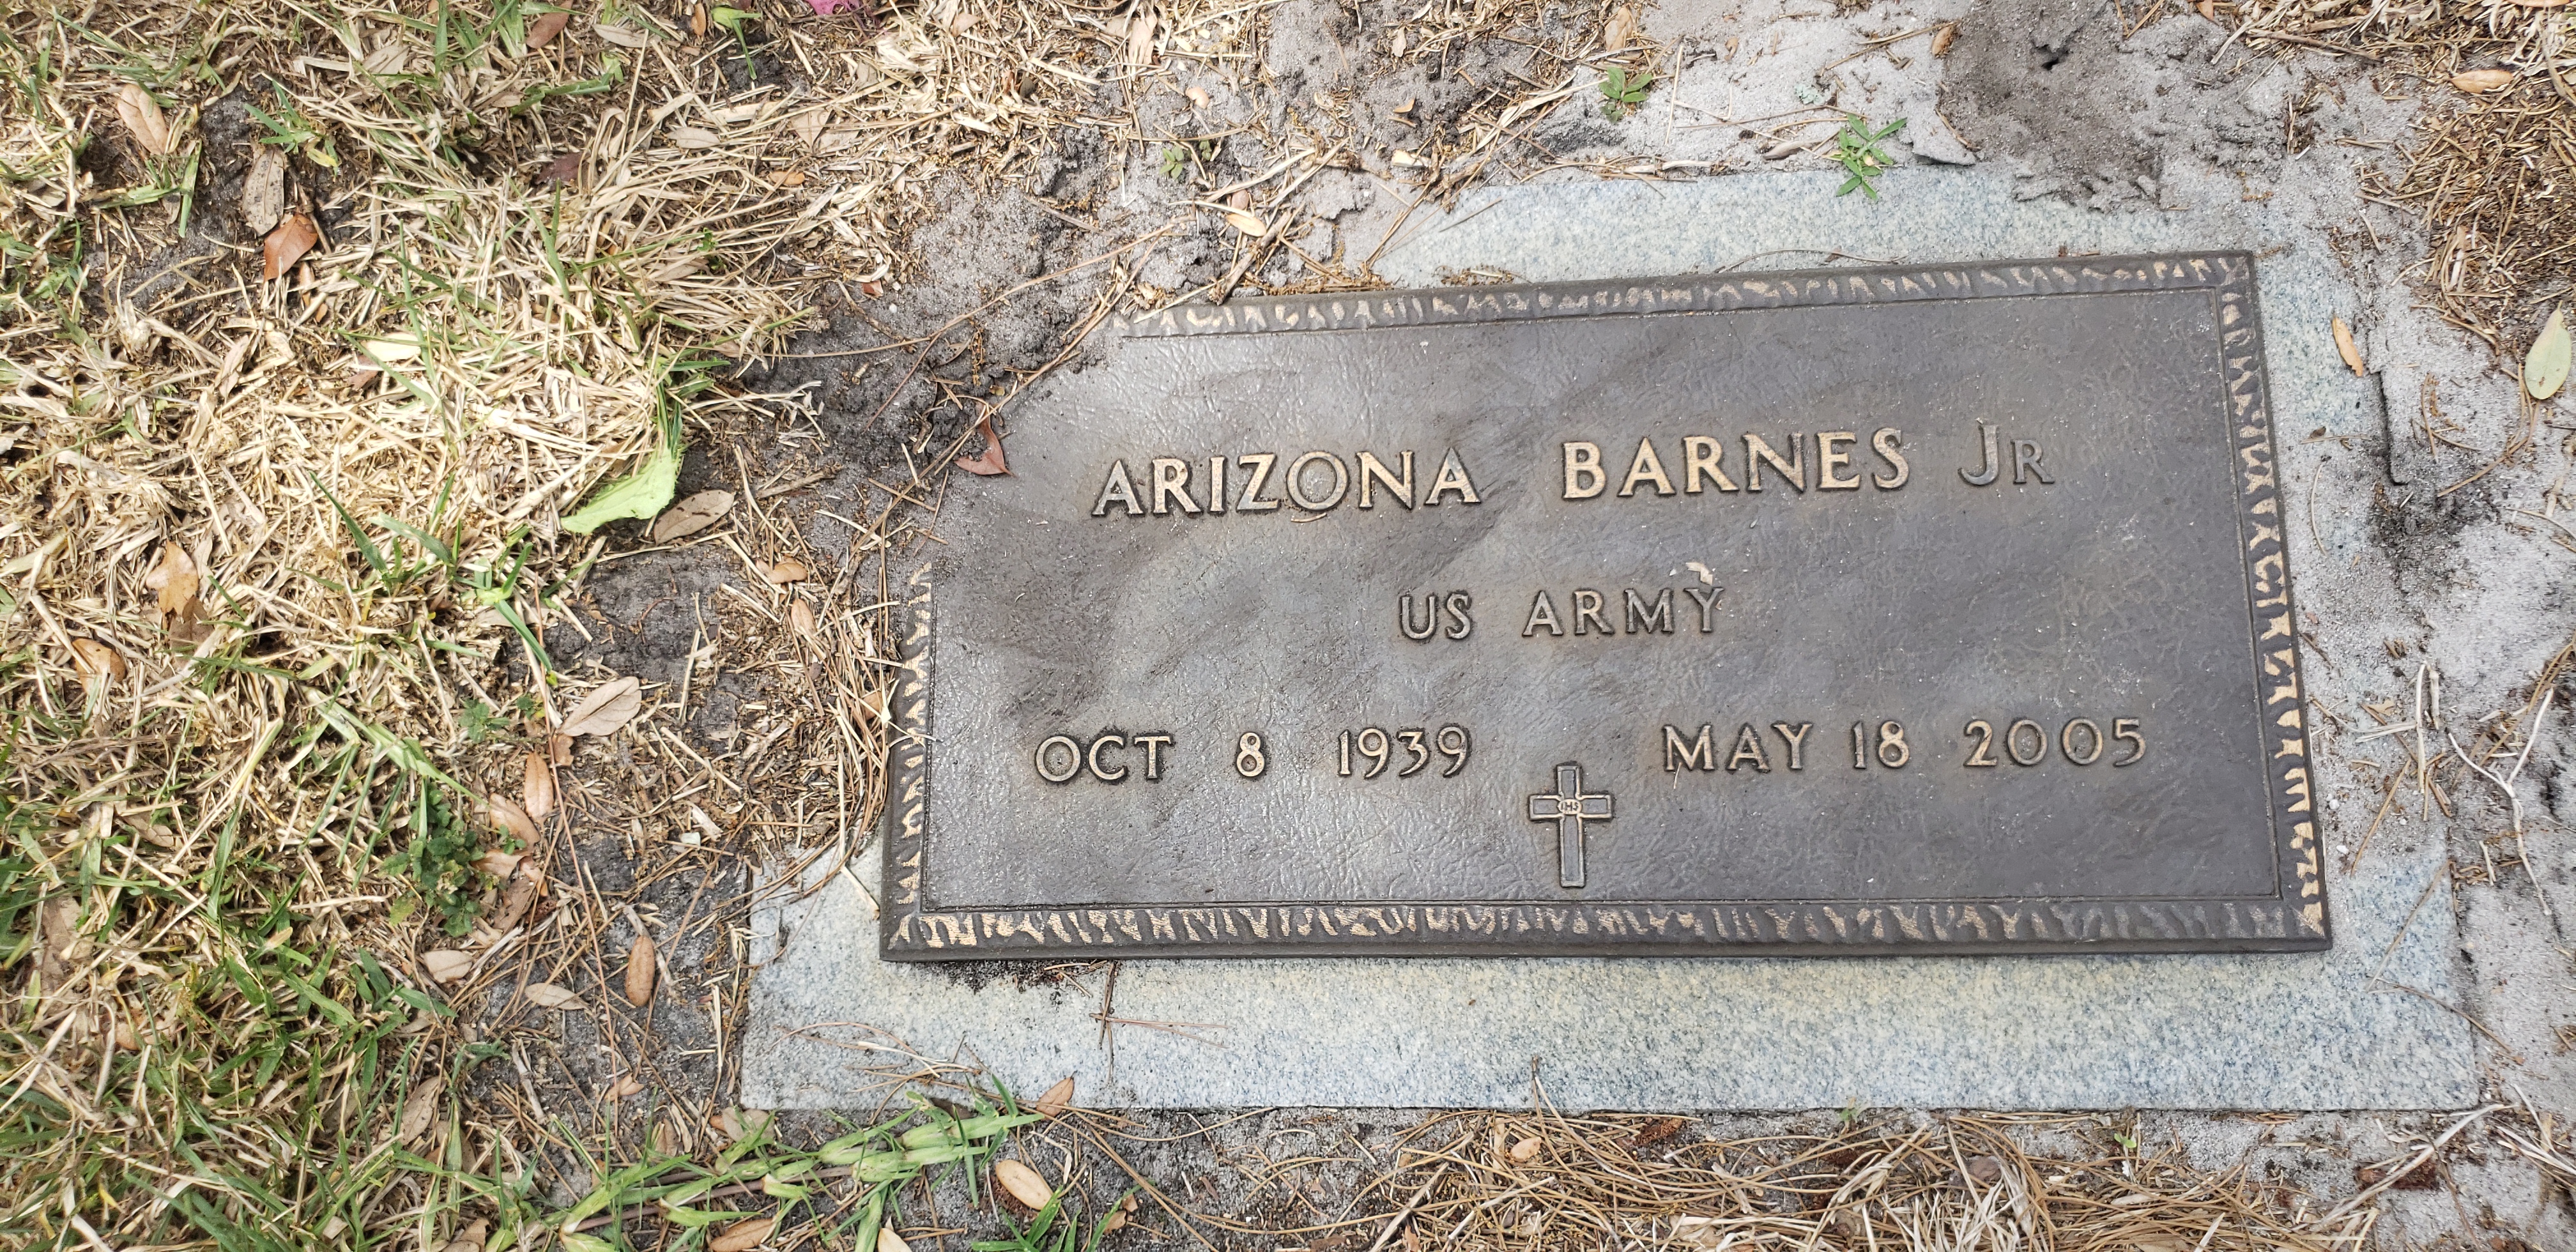 Arizona Barnes, Jr